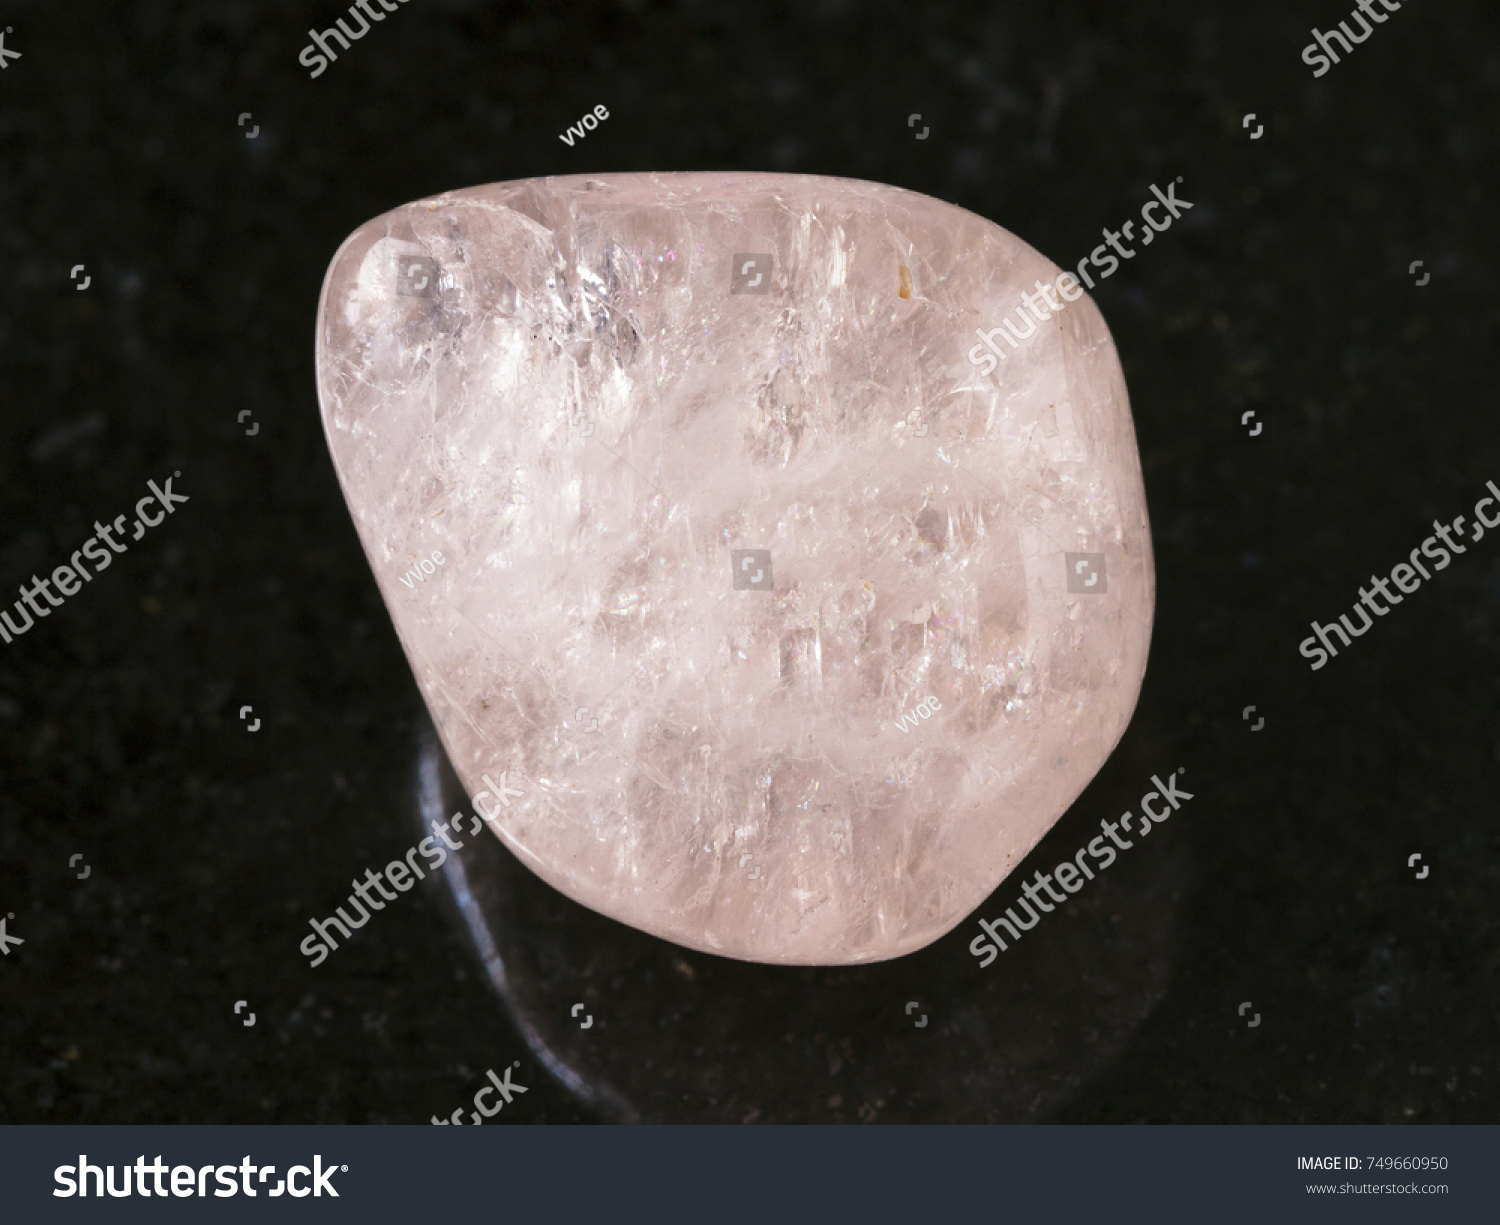 macro shooting of natural mineral rock specimen - tumbled morganite (pink beryl) gemstone on dark granite background from Ural Mountains, Russia #749660950